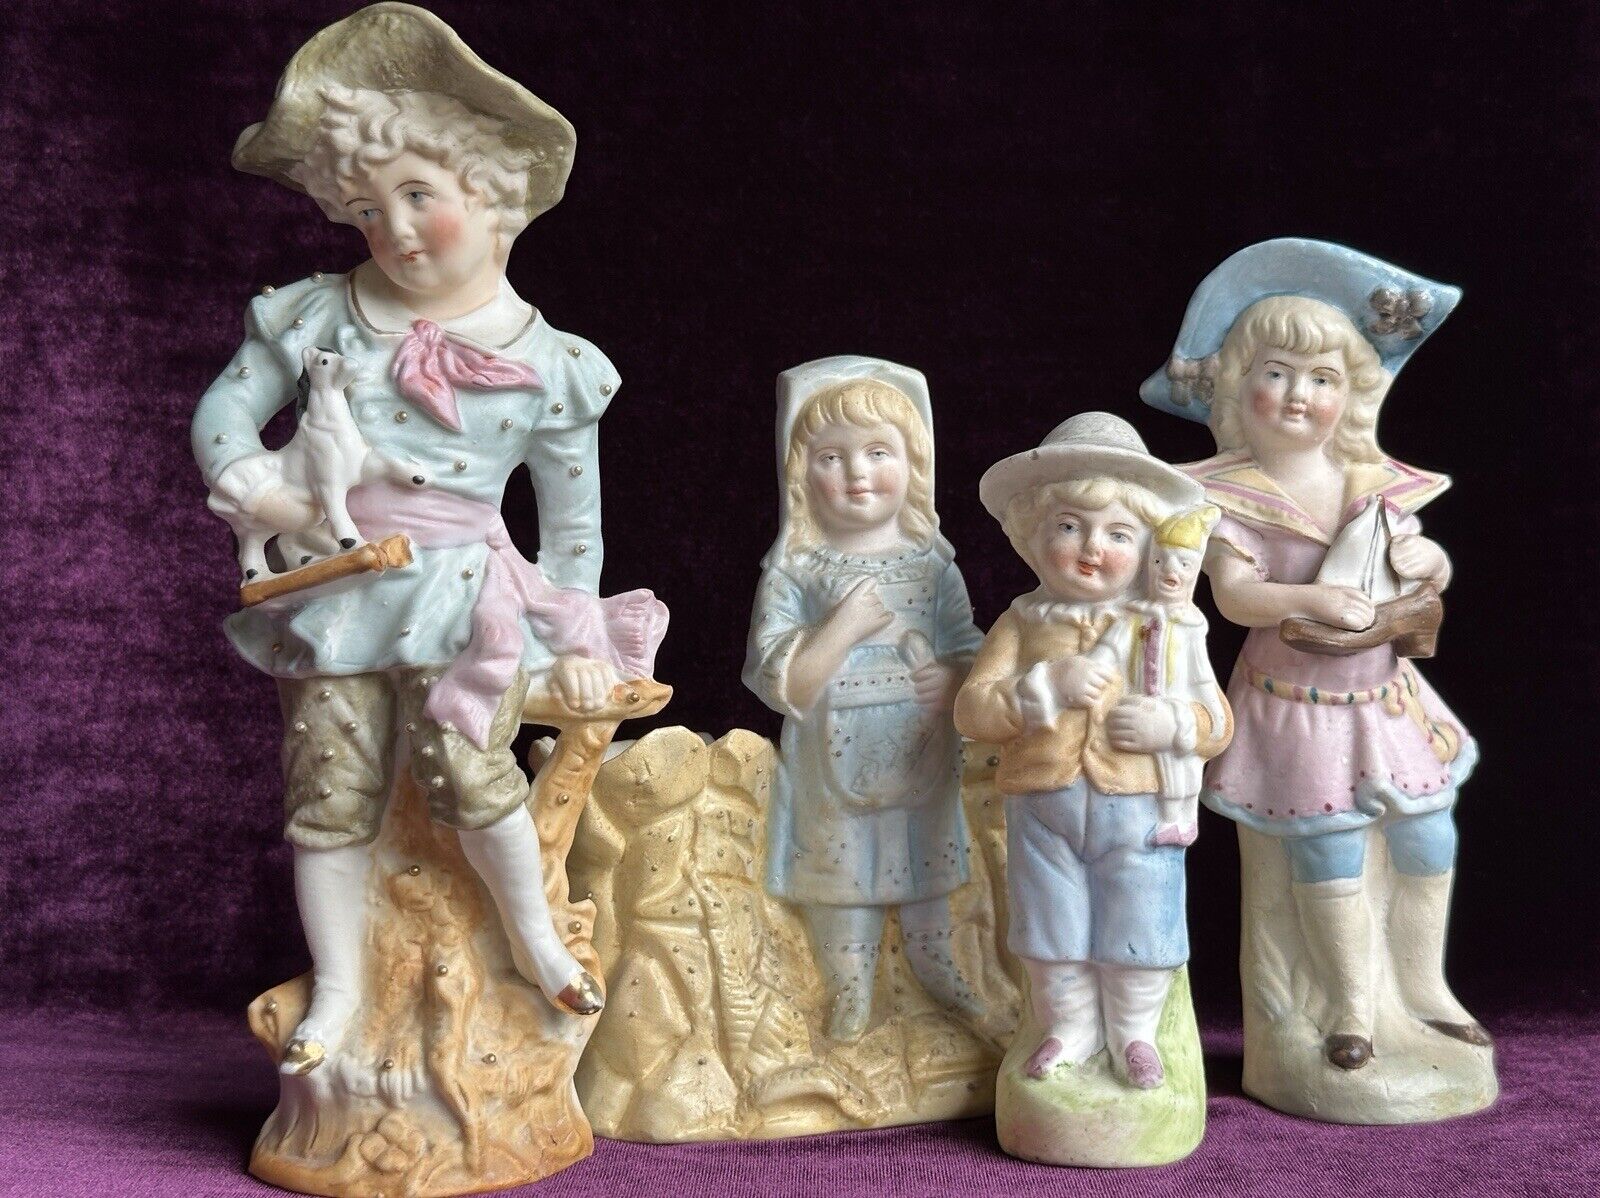 Lot of 4 Antique/Vintage German (?) Bisque Victorian Style Figurines